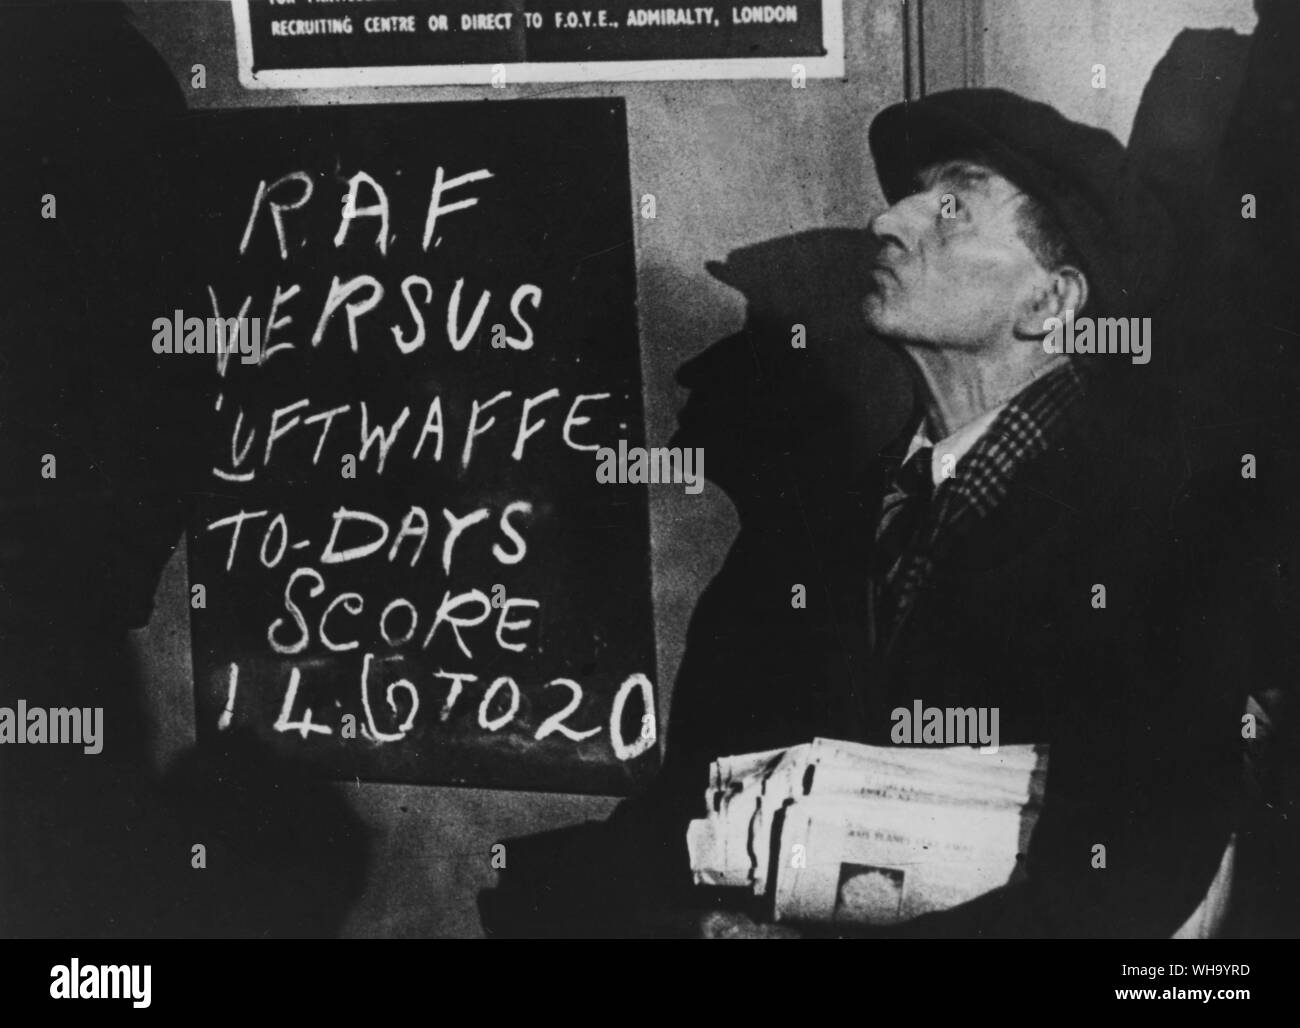 Battle of Britain: RAF versus Luftwaffe - Today's score - 146 to 20. Stock Photo